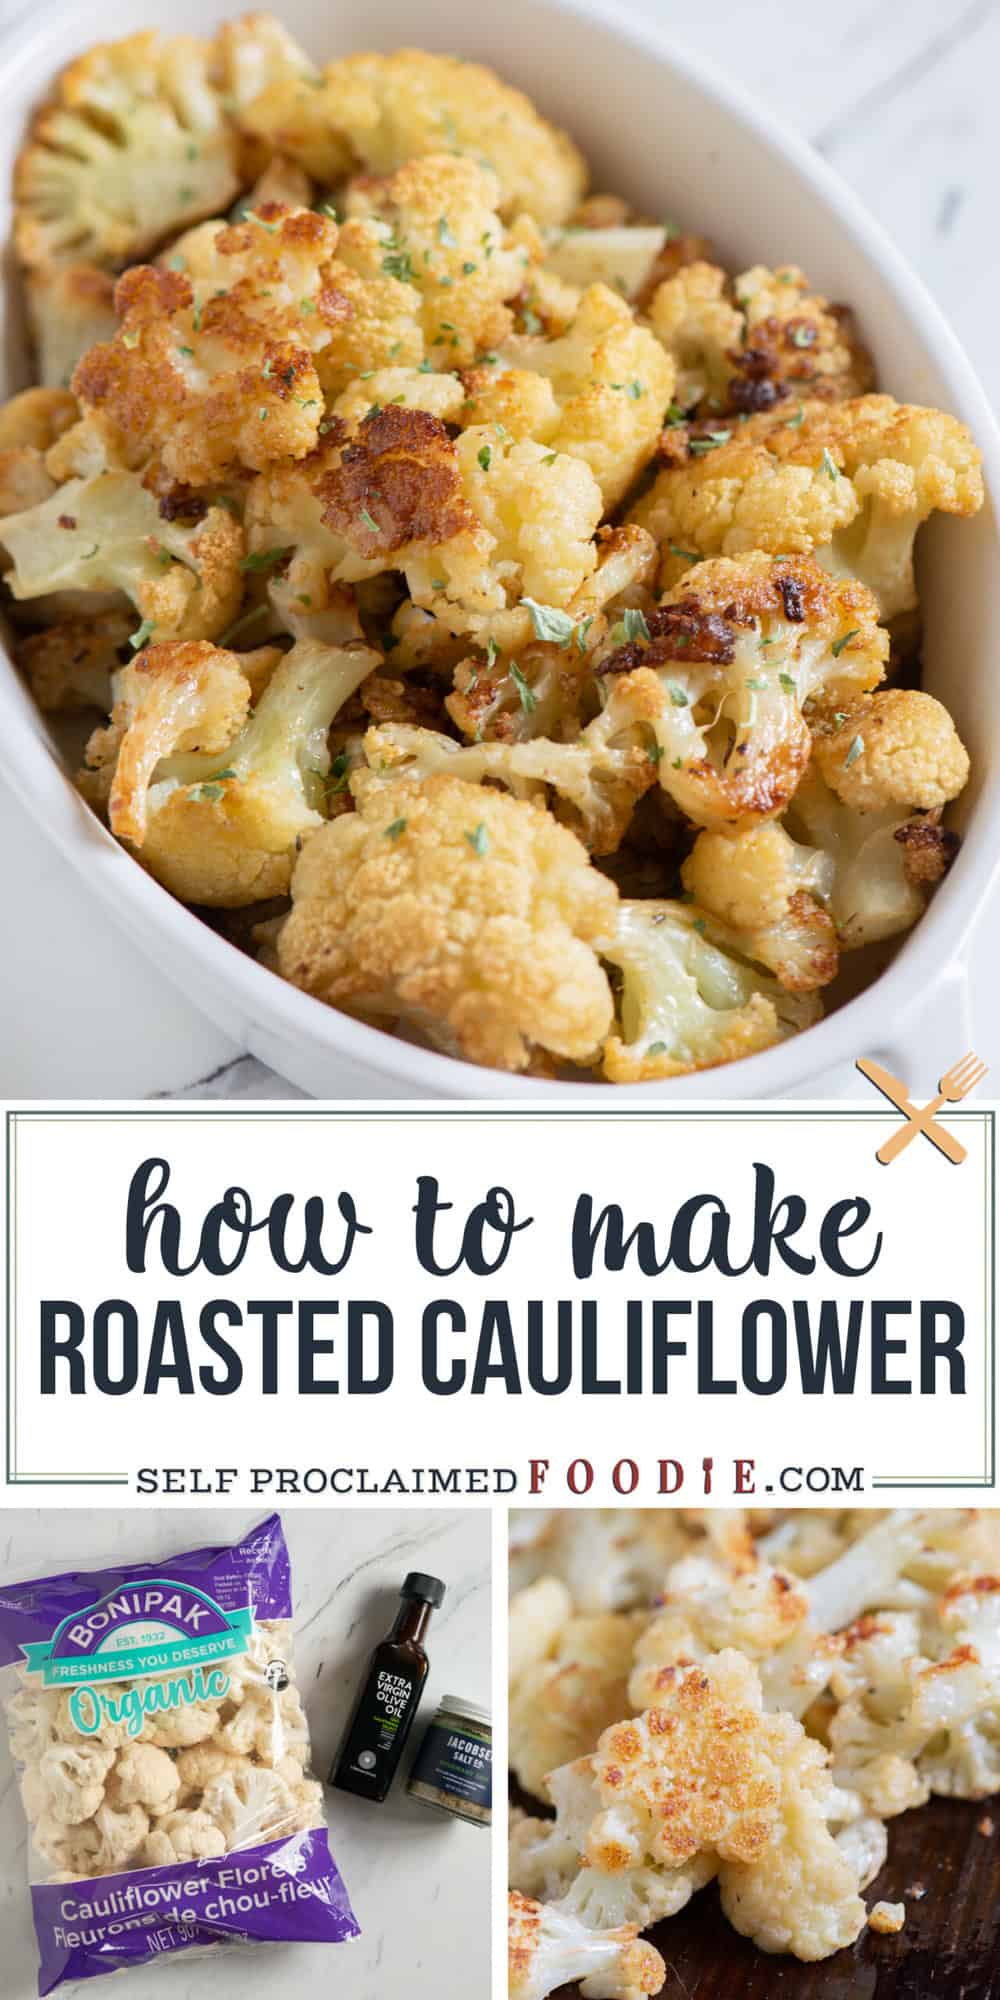 How to Roast Cauliflower - Healthy, Tasty, Easy to Make Recipe